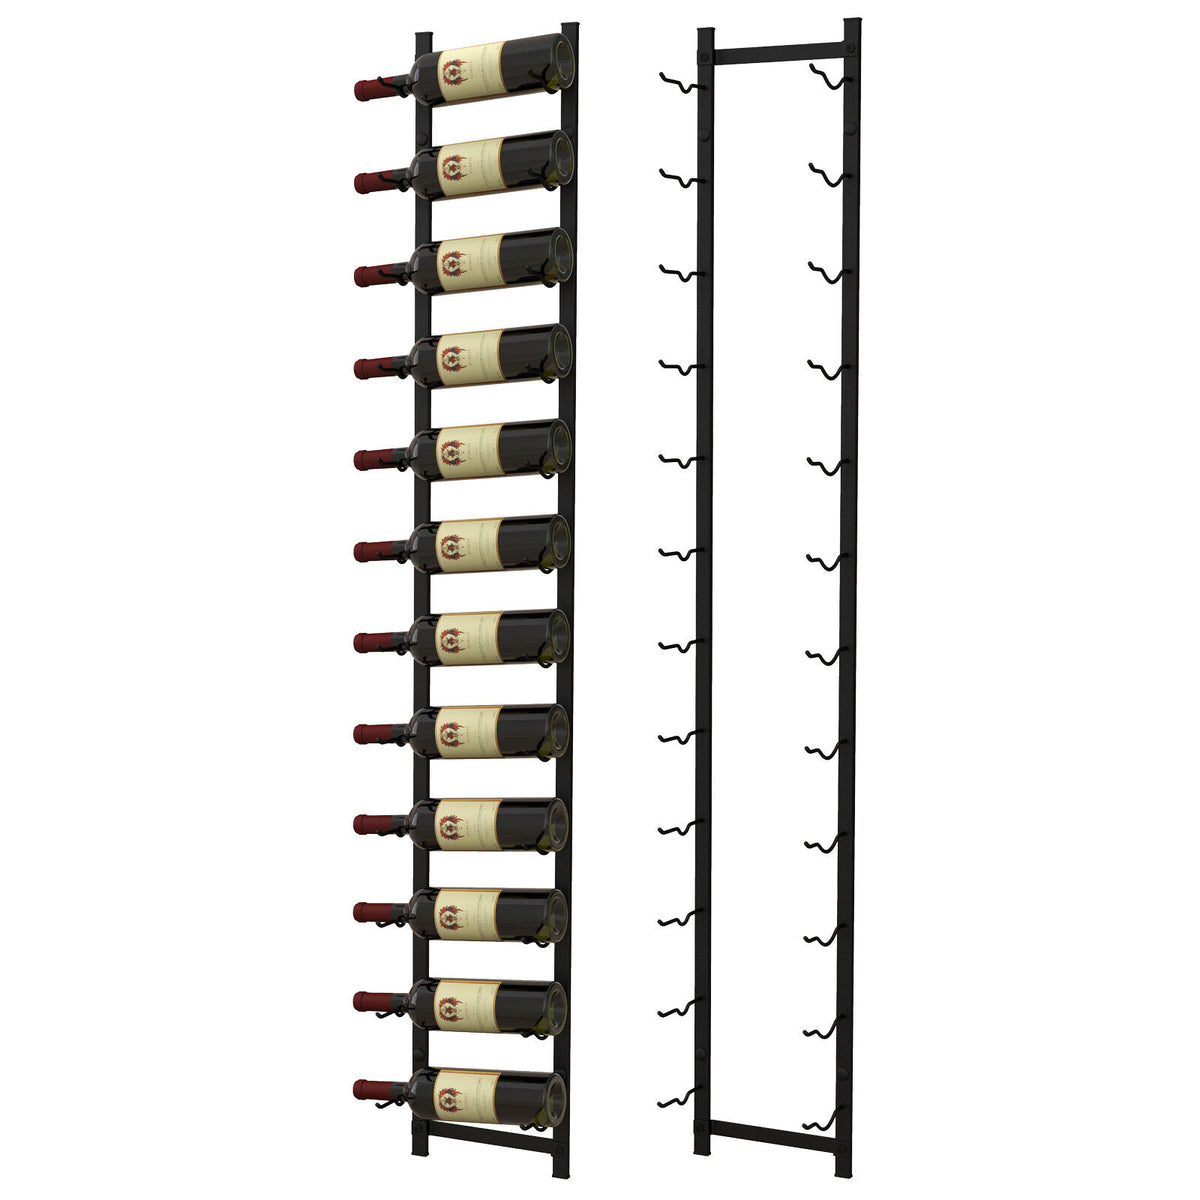 Wall Mounted Metal Wine Rack Display Holder with 12 Bottles Capacity